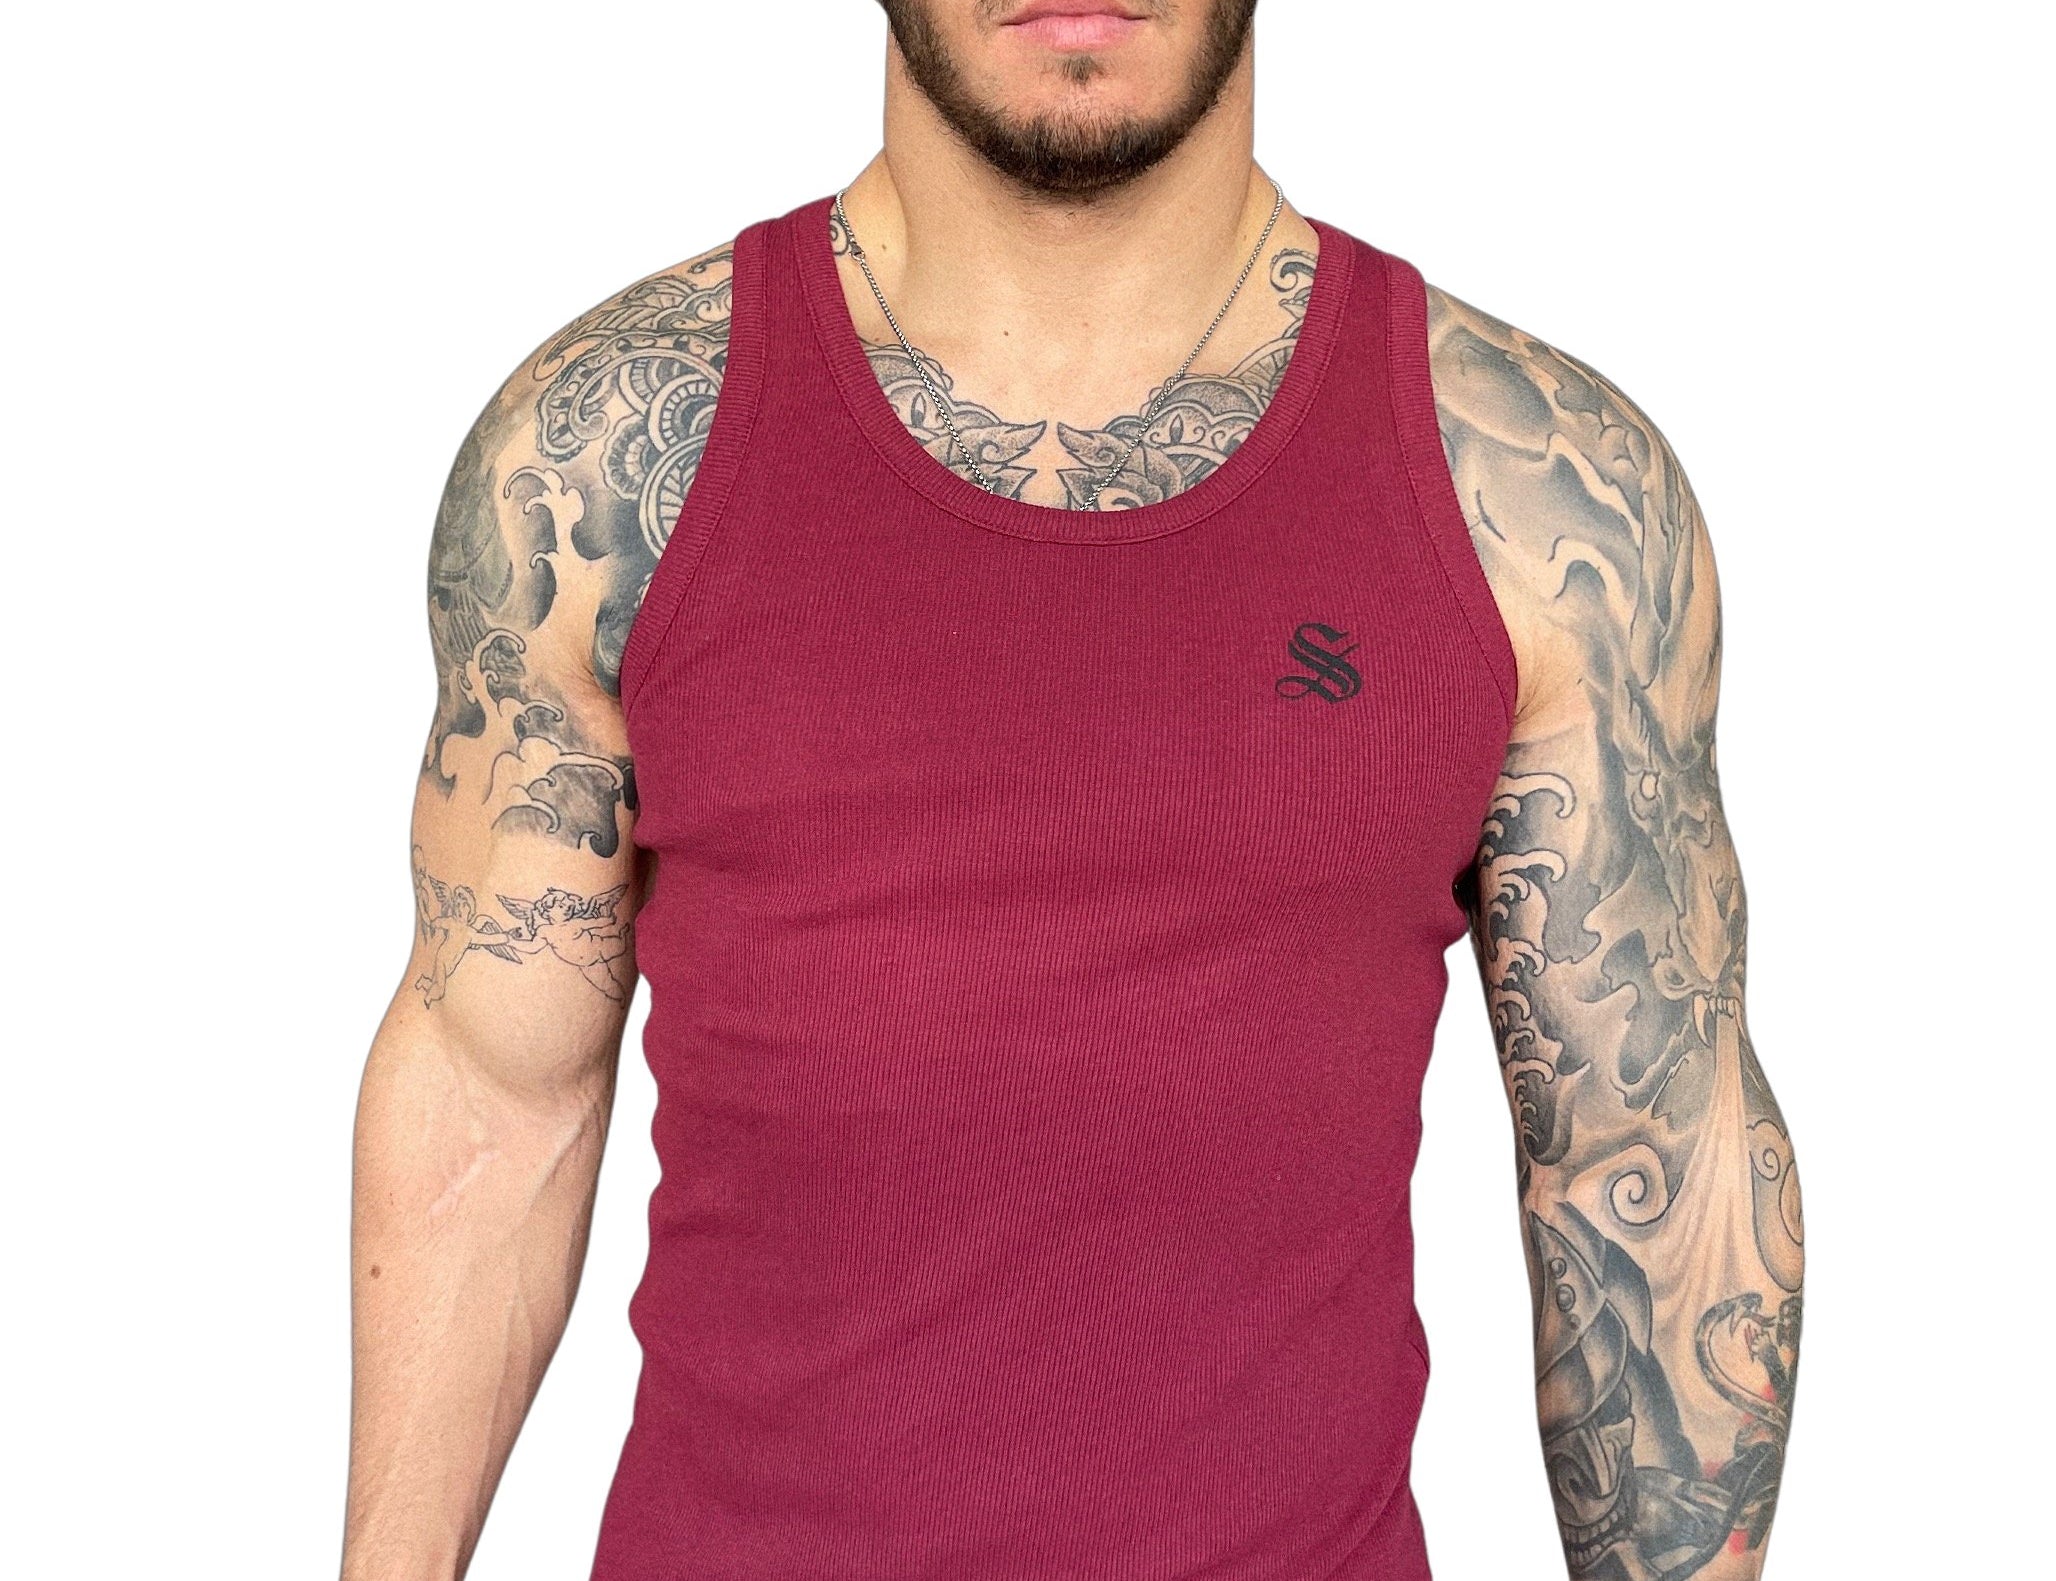 Burdona - Red Tank Top for Men - Sarman Fashion - Wholesale Clothing Fashion Brand for Men from Canada